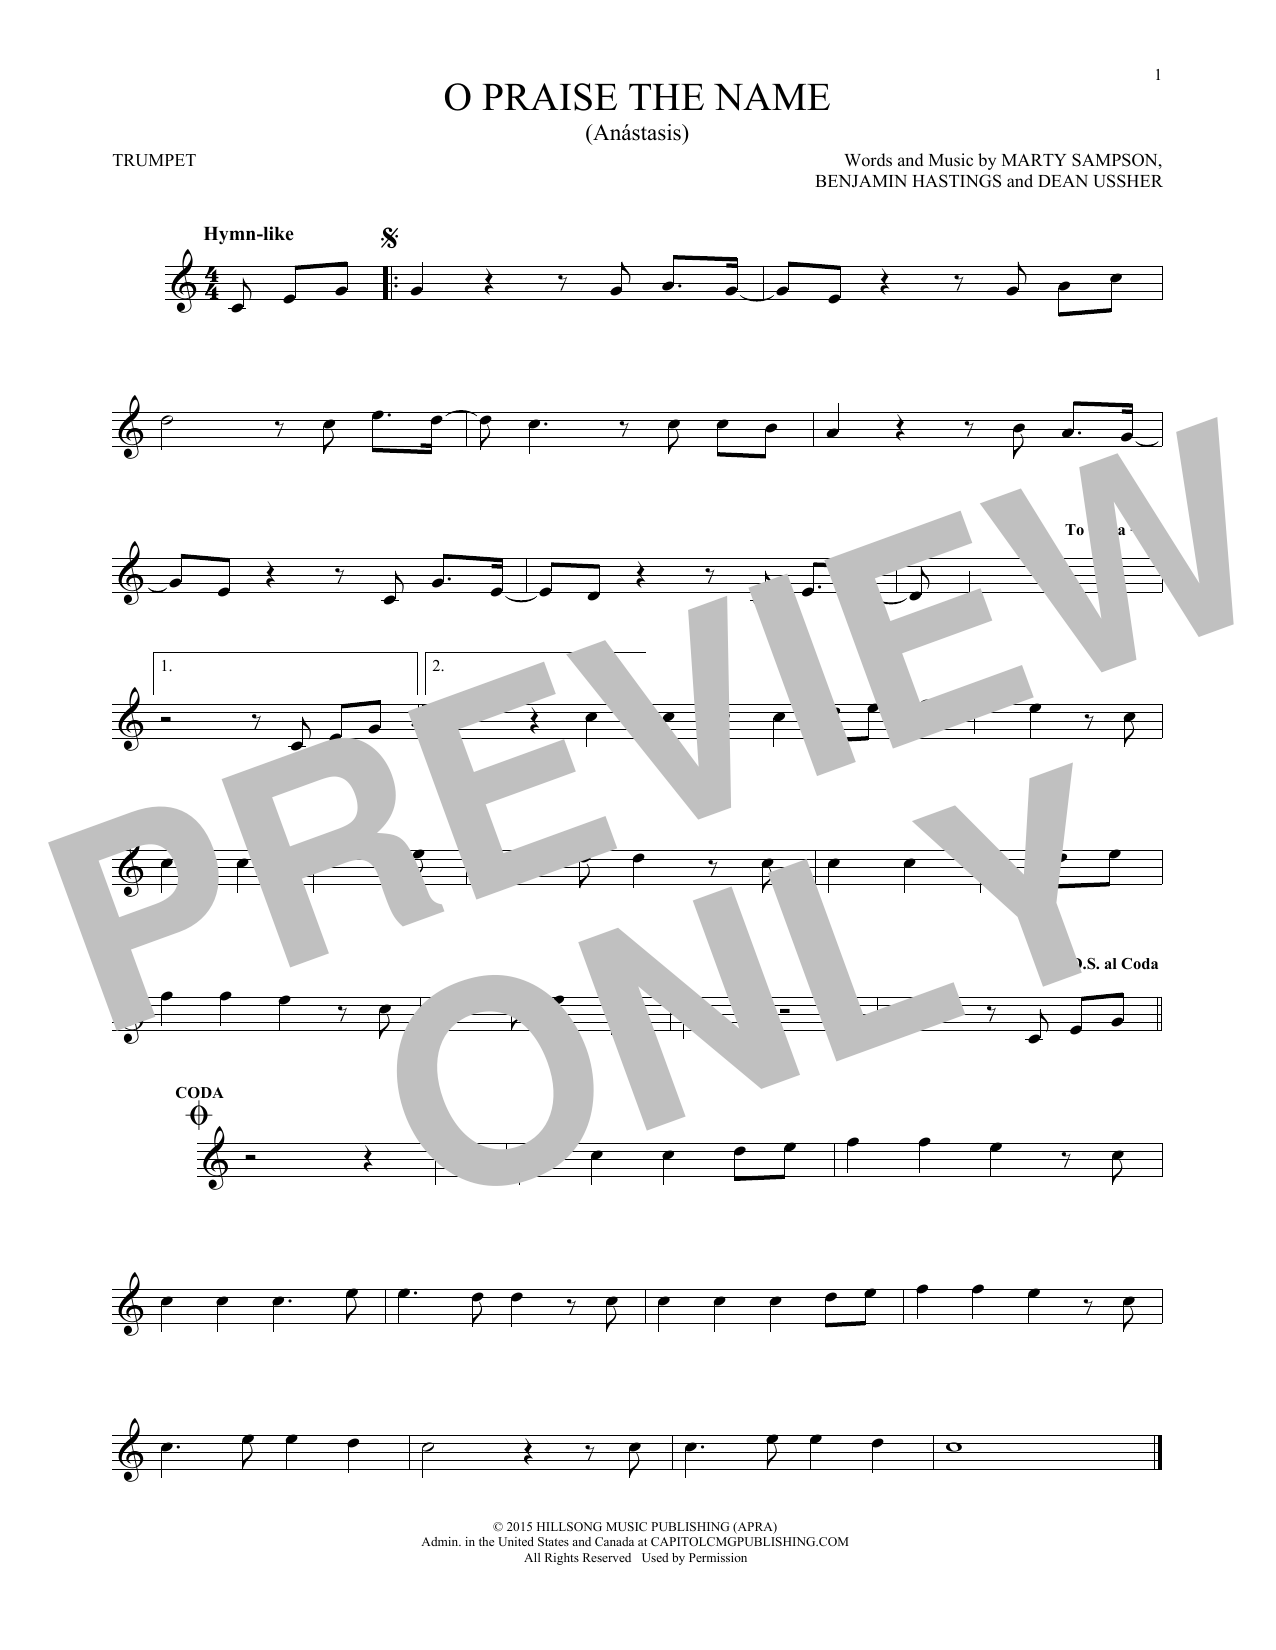 Hillsong Worship O Praise The Name (Anastasis) Sheet Music Notes & Chords for Violin Solo - Download or Print PDF